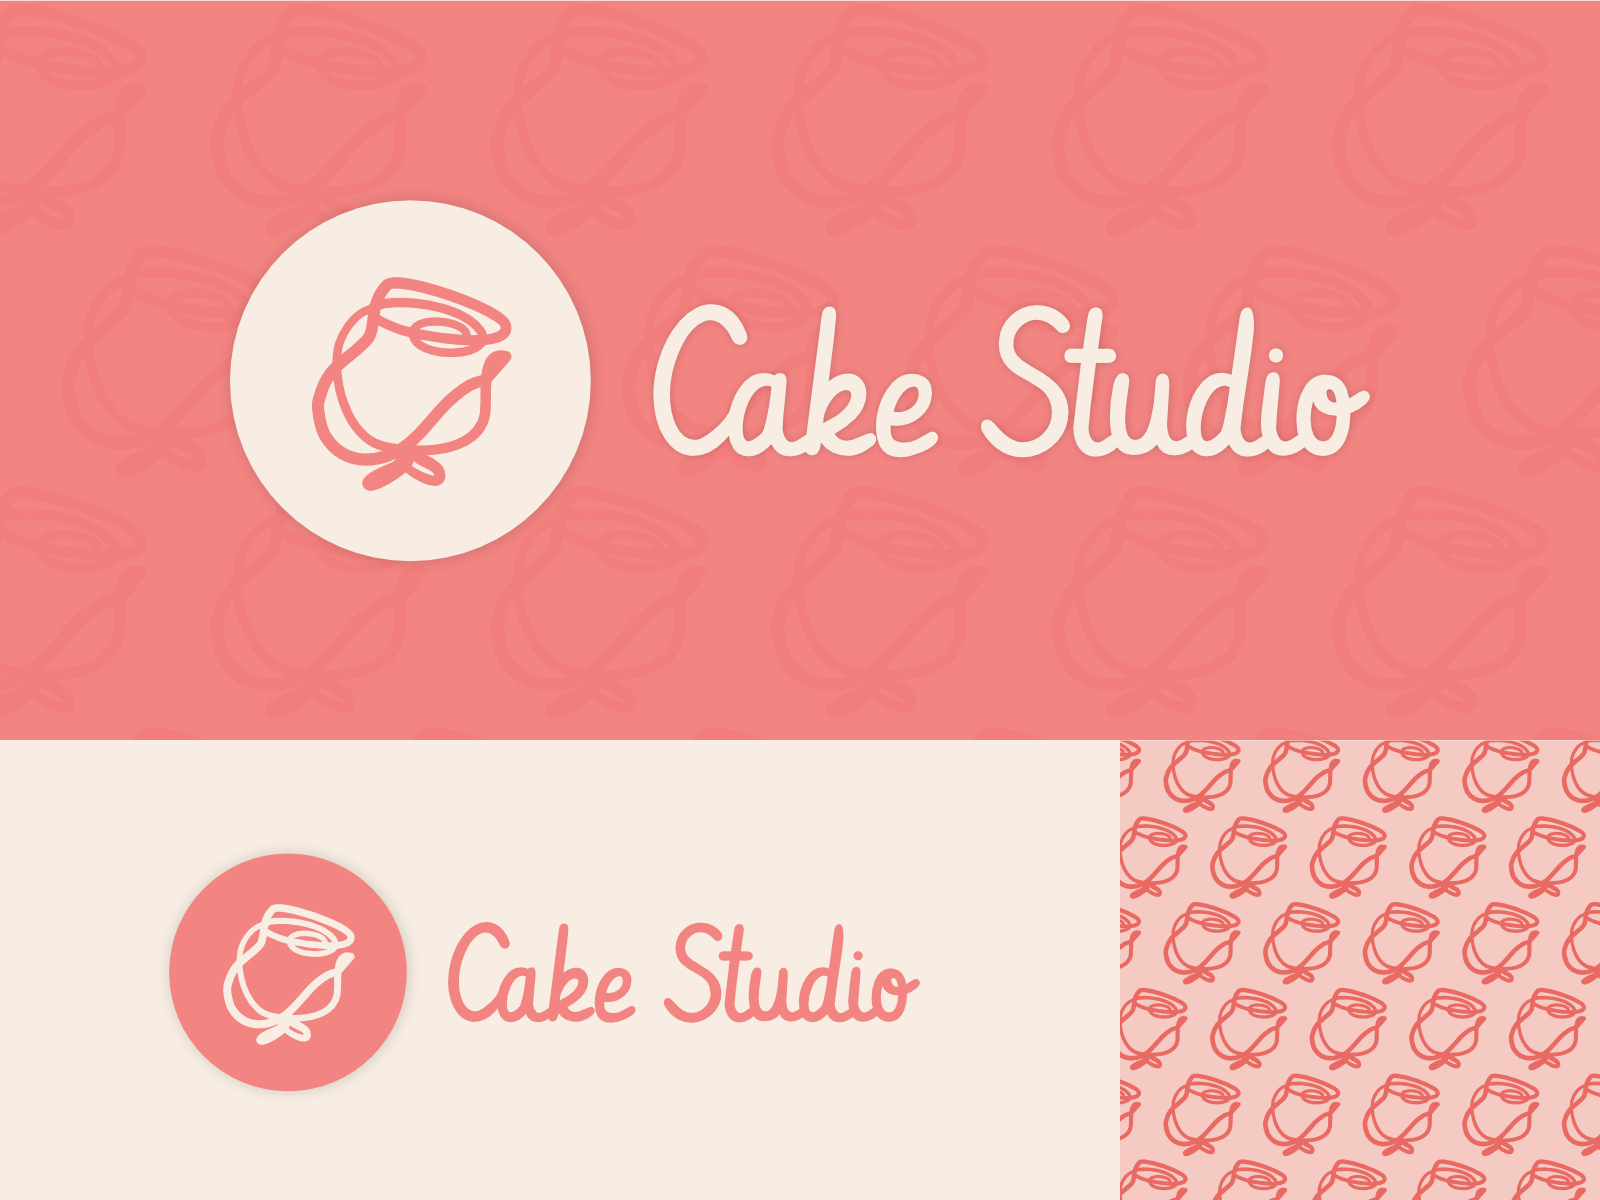 Details 64+ cake studio and cafe latest - in.daotaonec